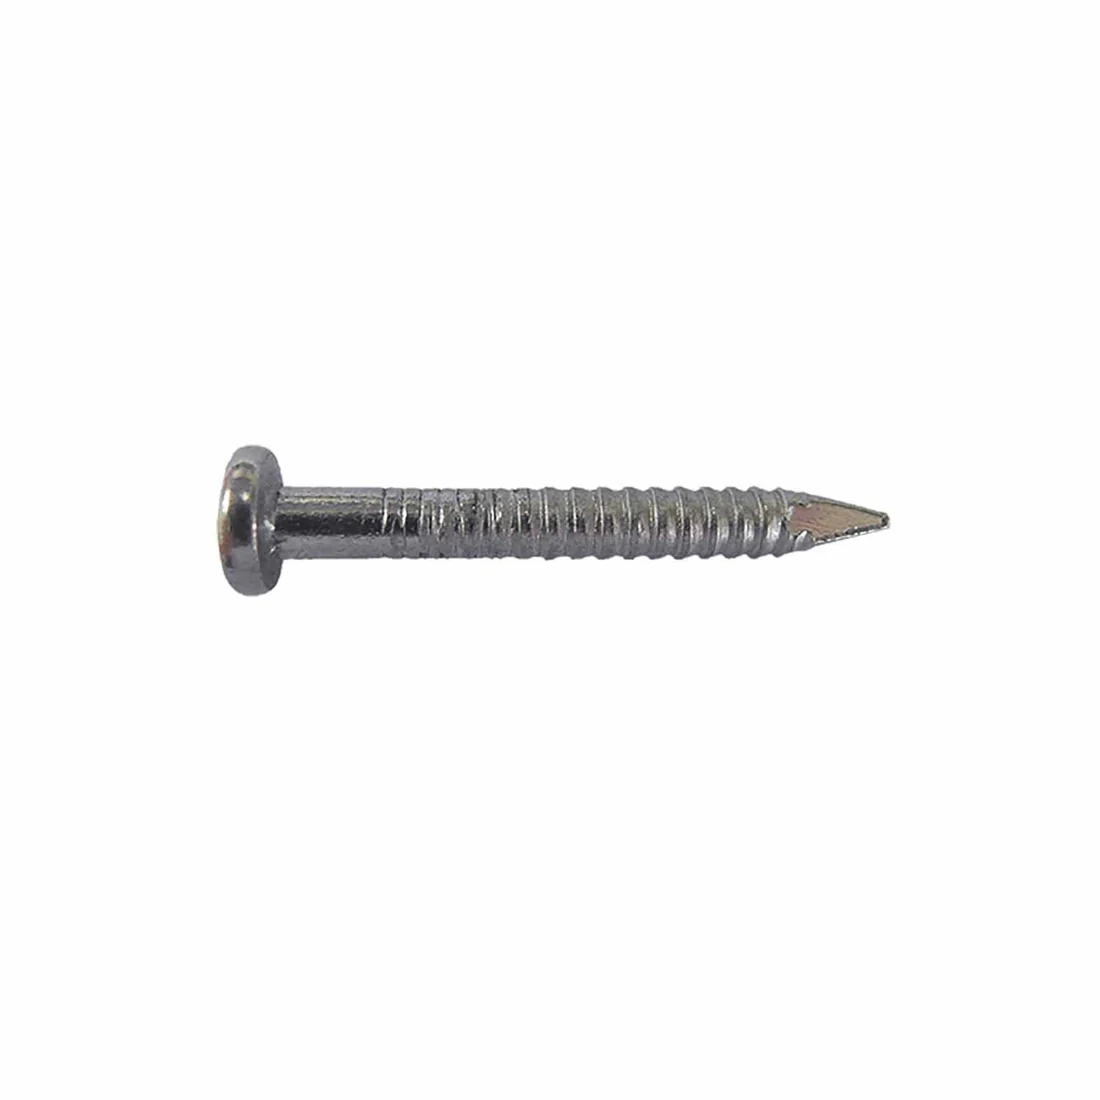 Ecko Bracket Nails 30 x 3.15mm, 2kg 316 Stainless Steel